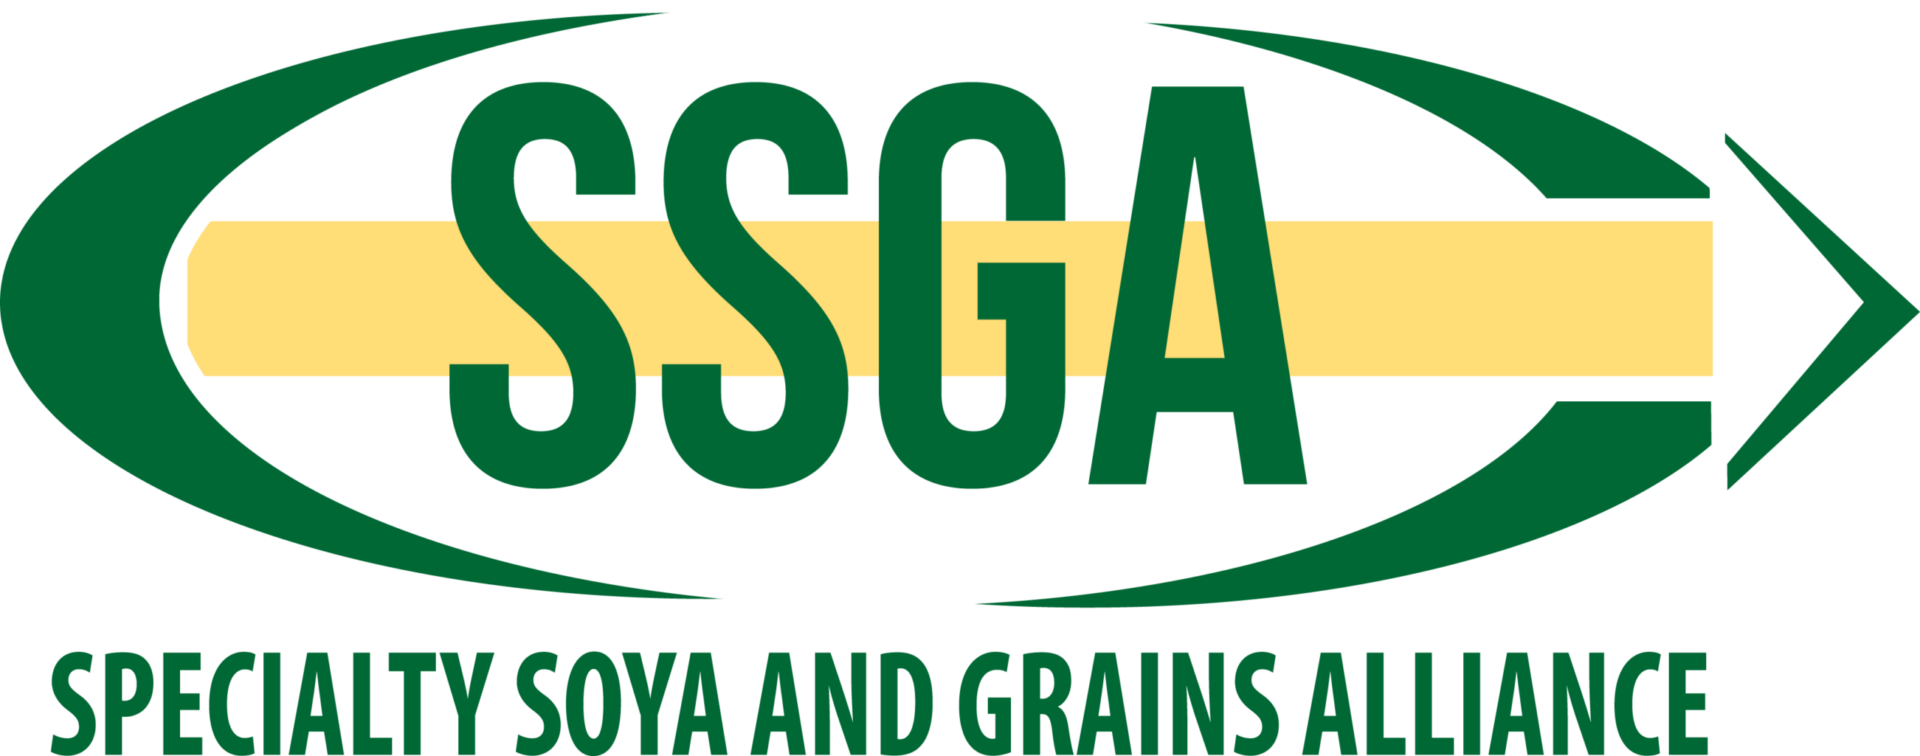 SSGA-web-logo-scaled